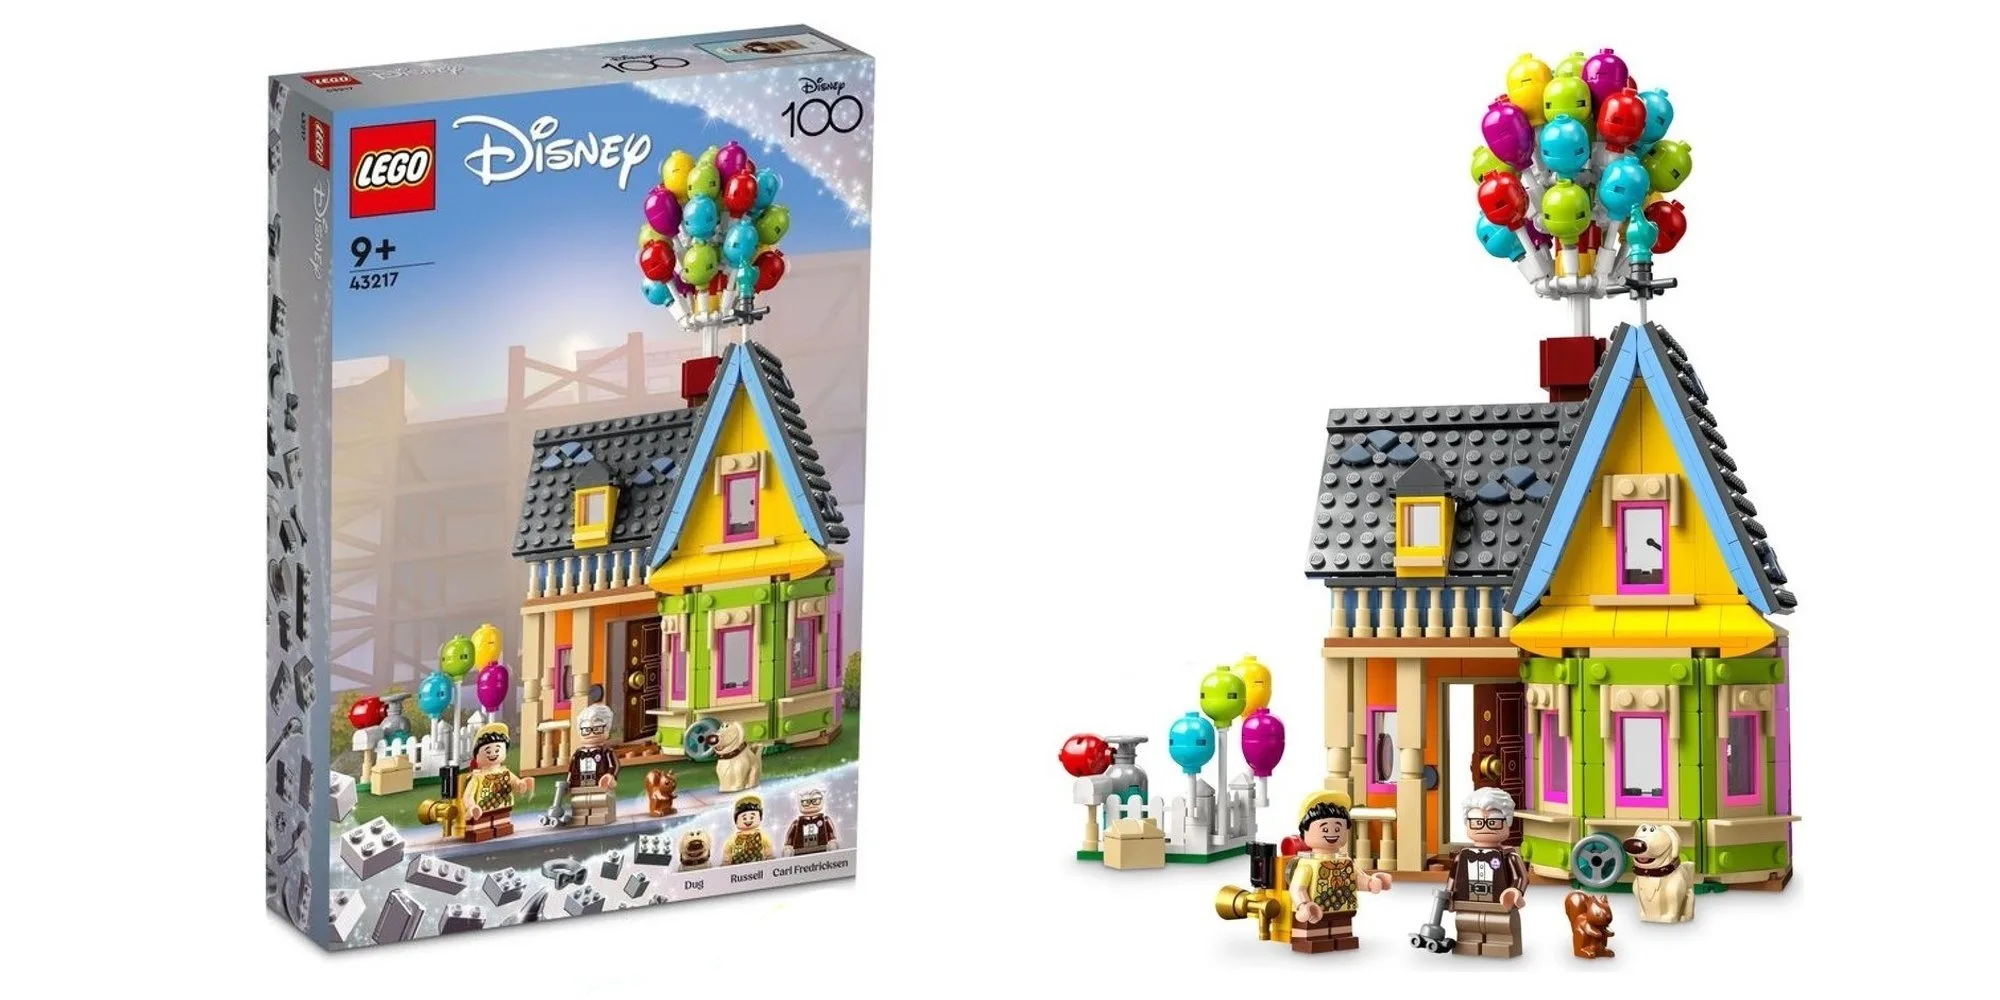 Best LEGO Disney sets - The 'UP' House